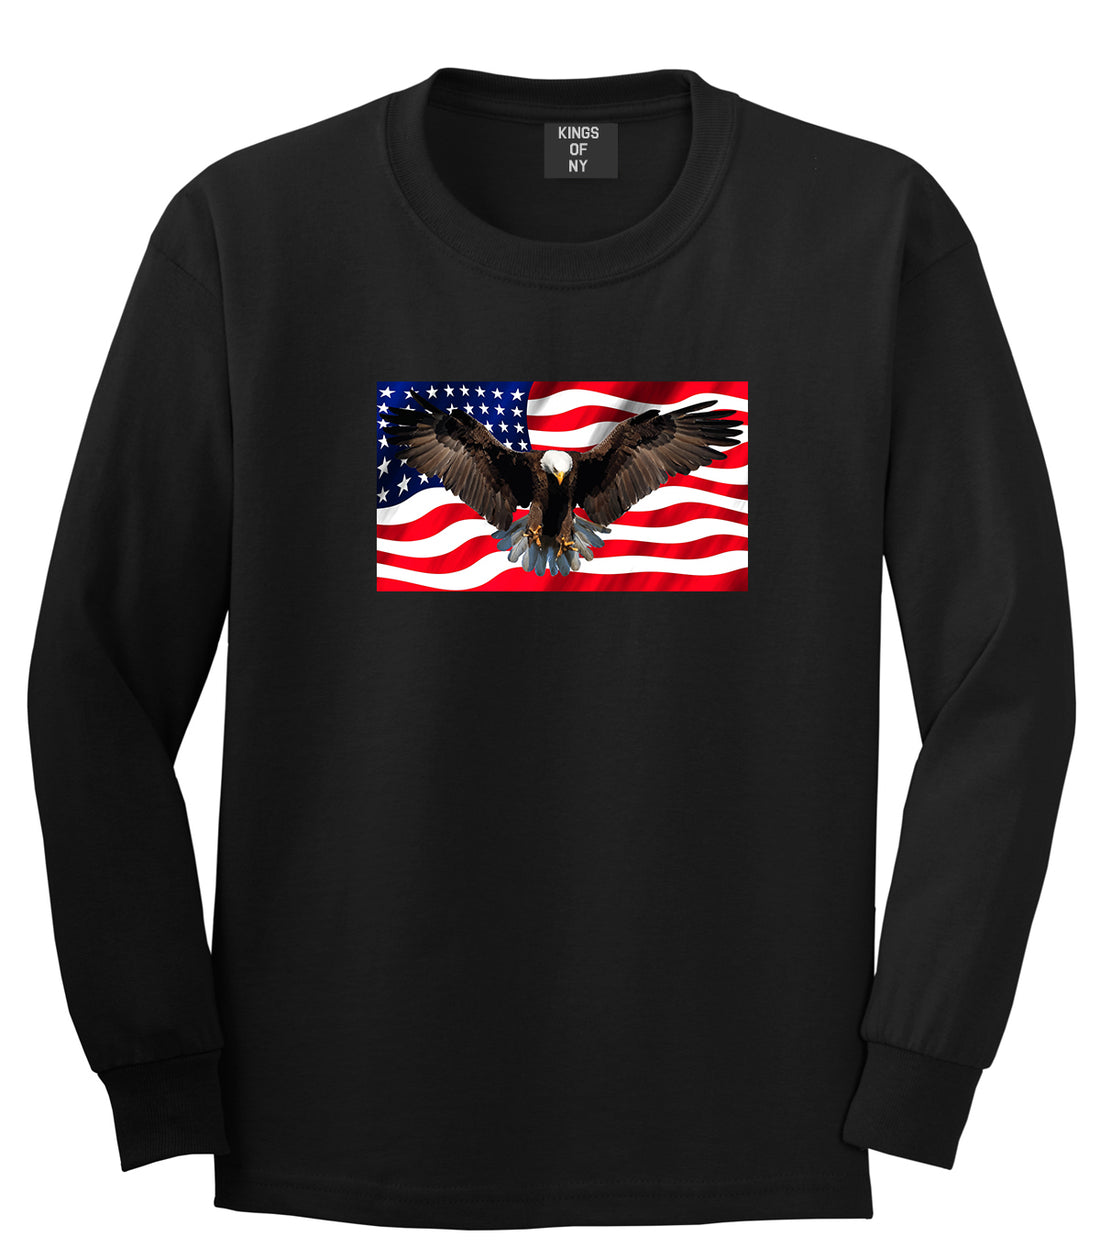 Bald Eagle American Flag Black Long Sleeve T-Shirt by Kings Of NY